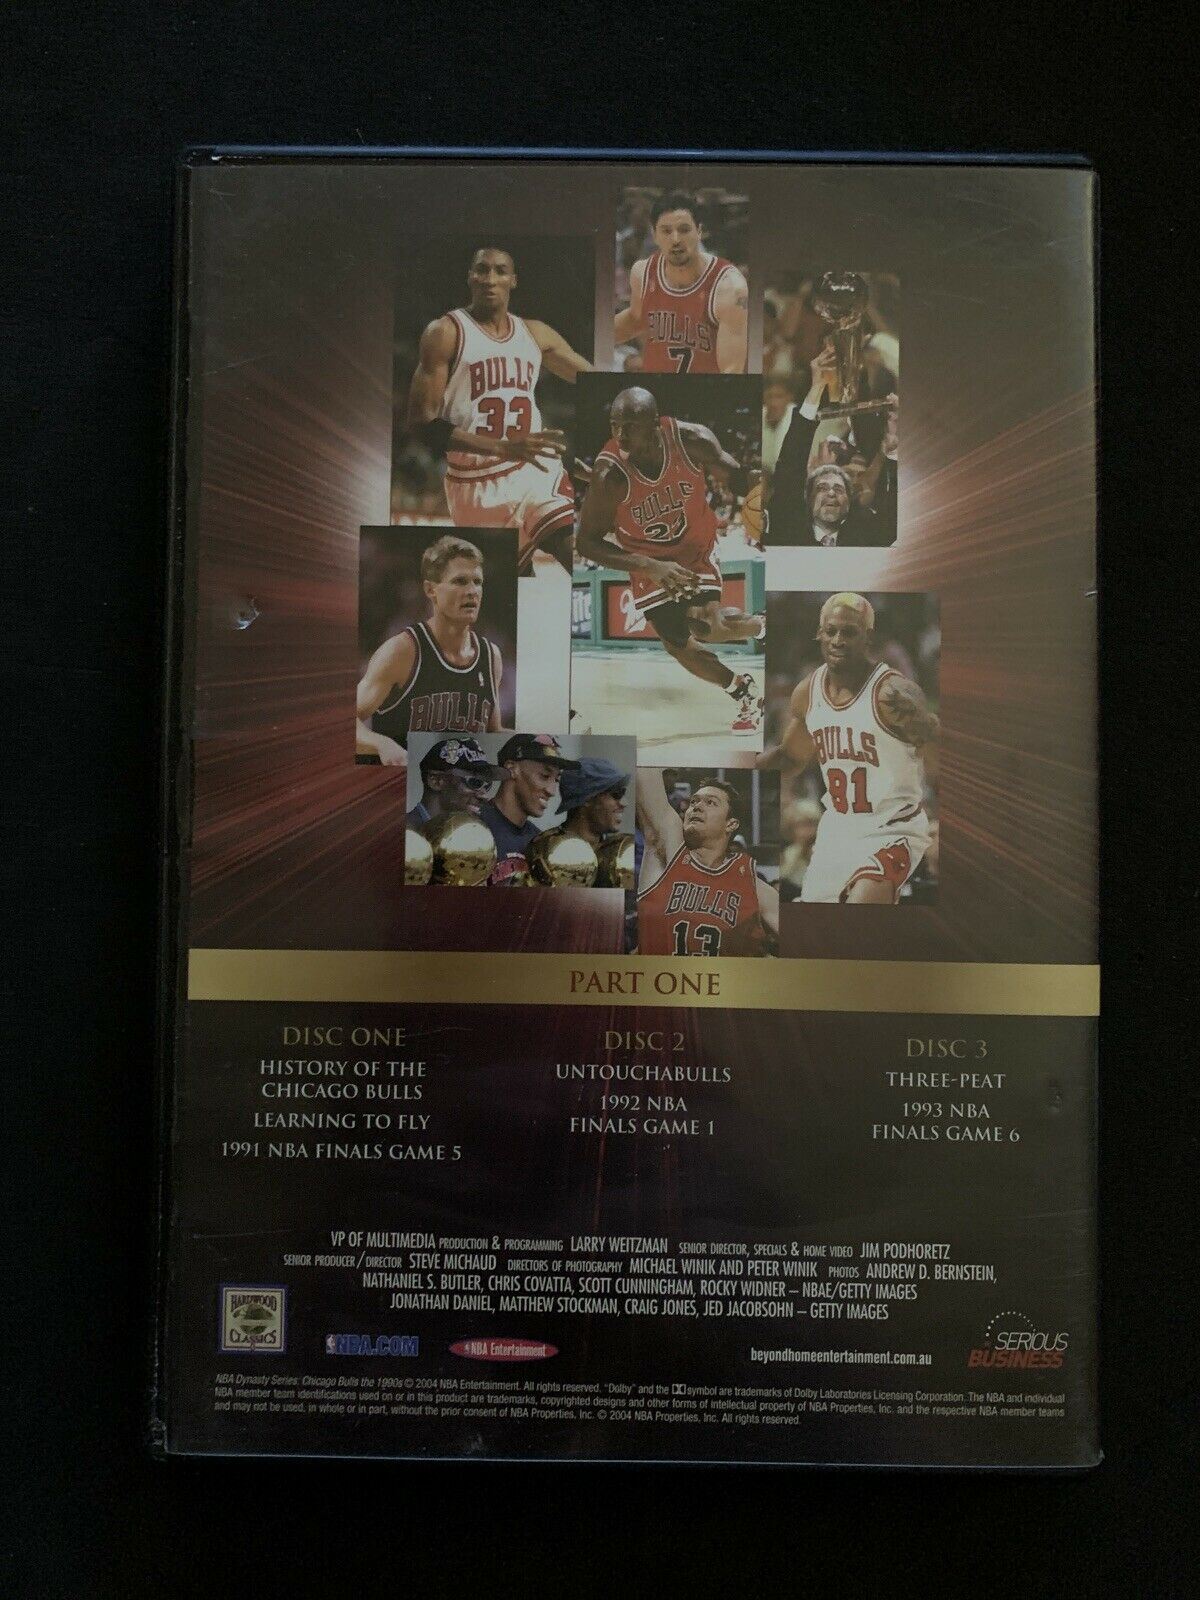 NBA - Dynasty Series : Chicago Bulls - The Bulls 1990's - Part 1 (DVD, 2011)